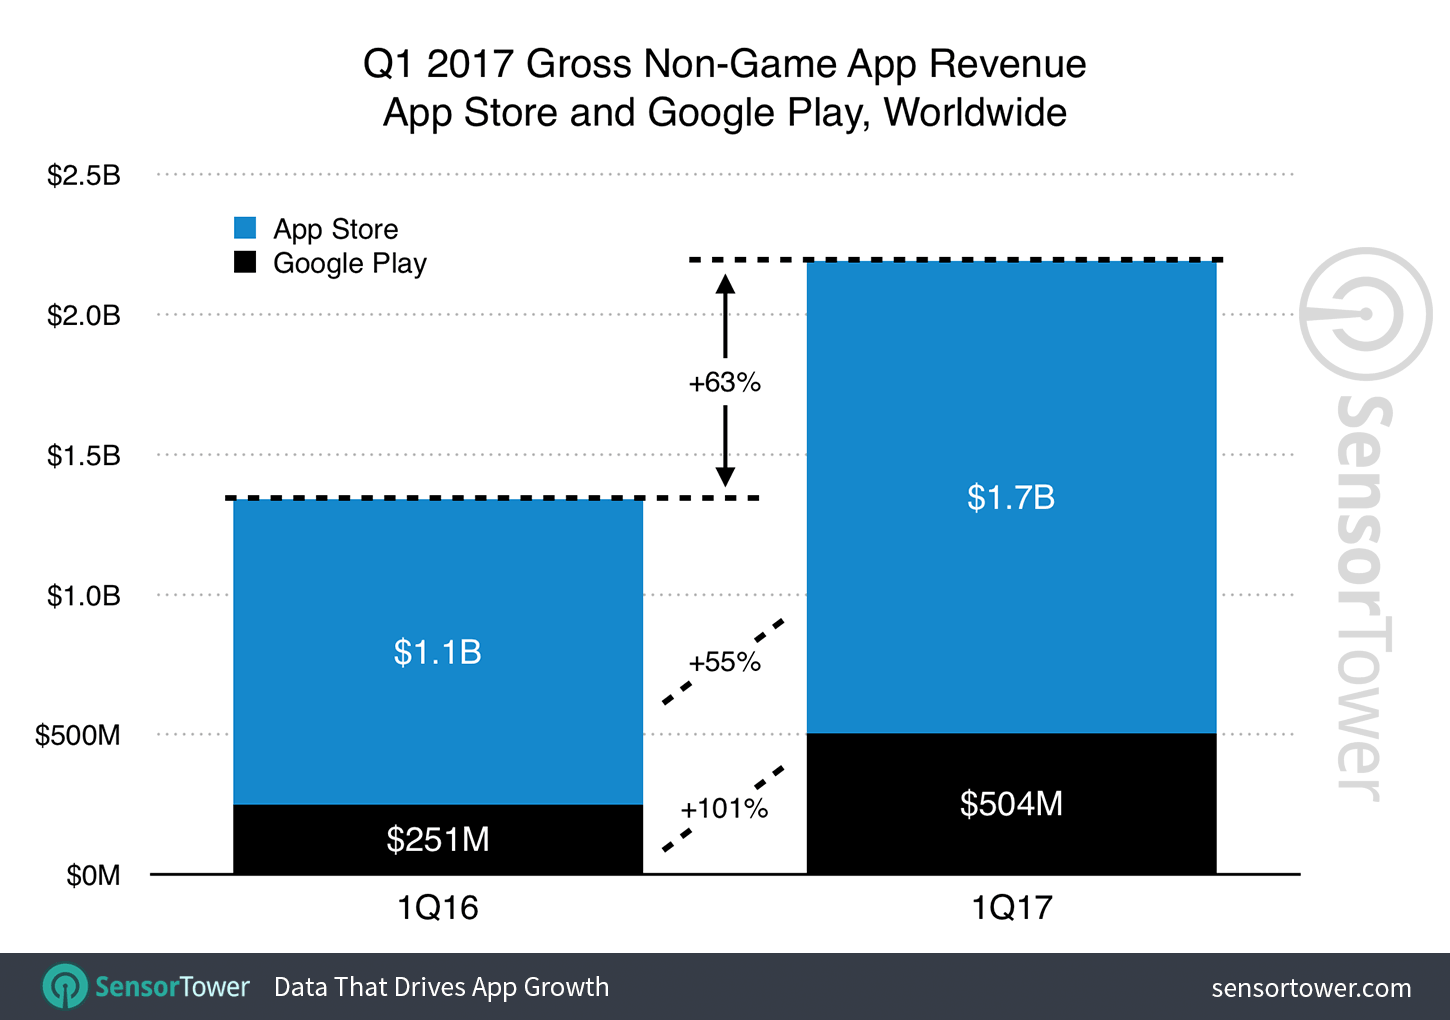 Q1 2017 Apps Worldwide Revenue Growth